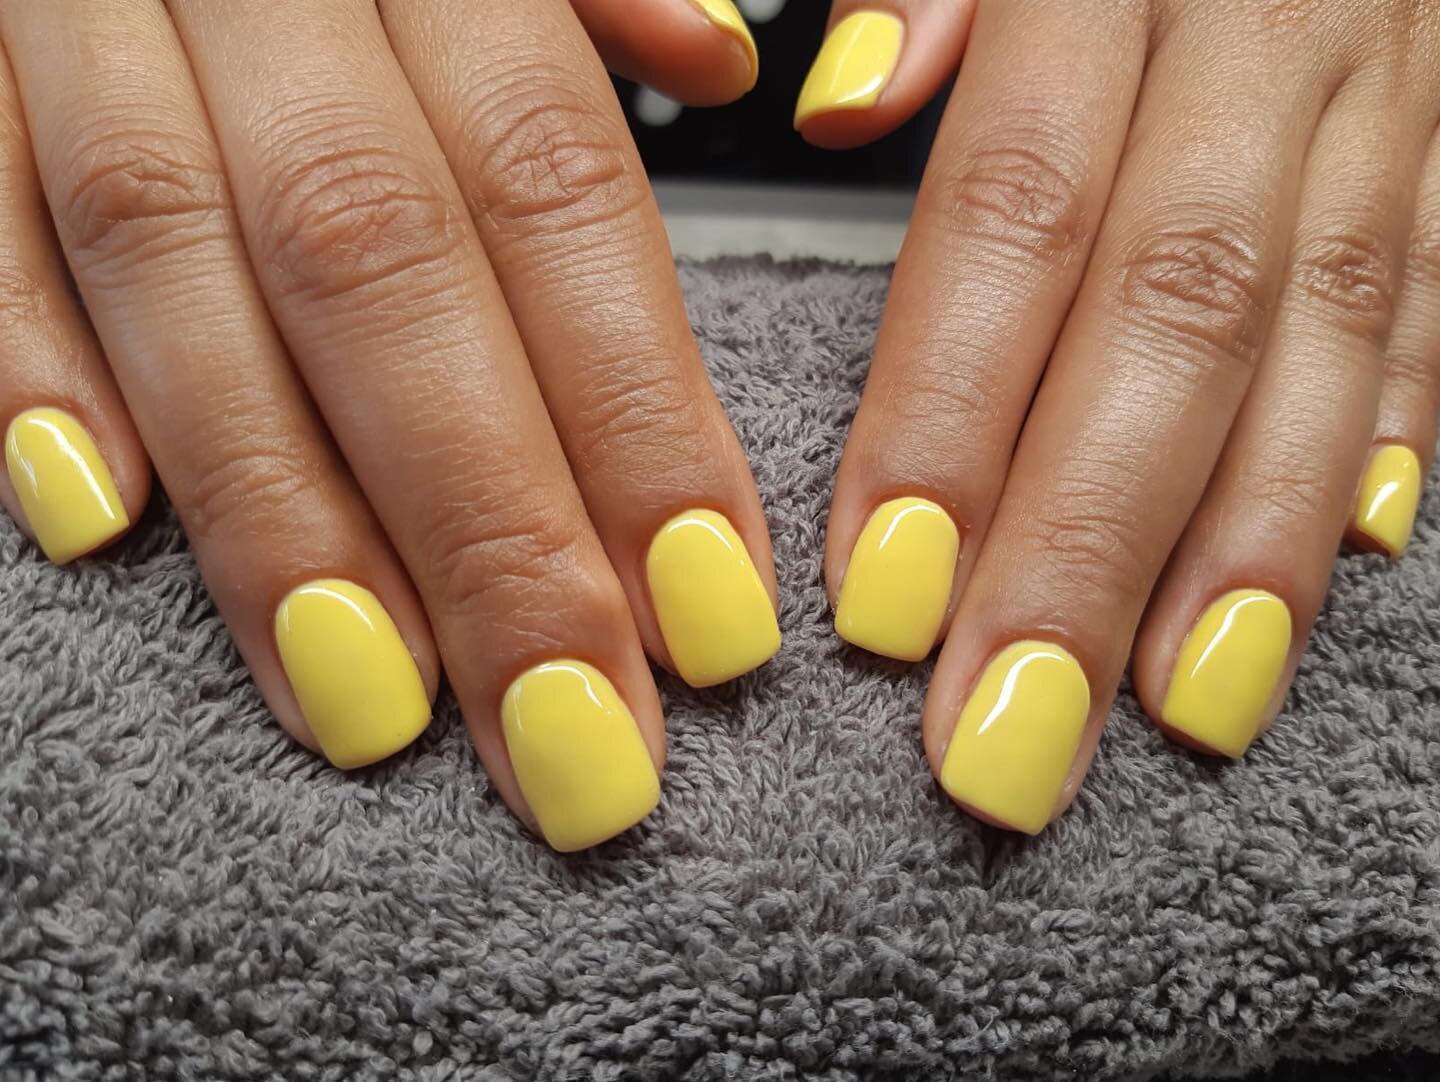 Twinning with the ☀️ 

#yellow #yellownails #gelnails #manicure